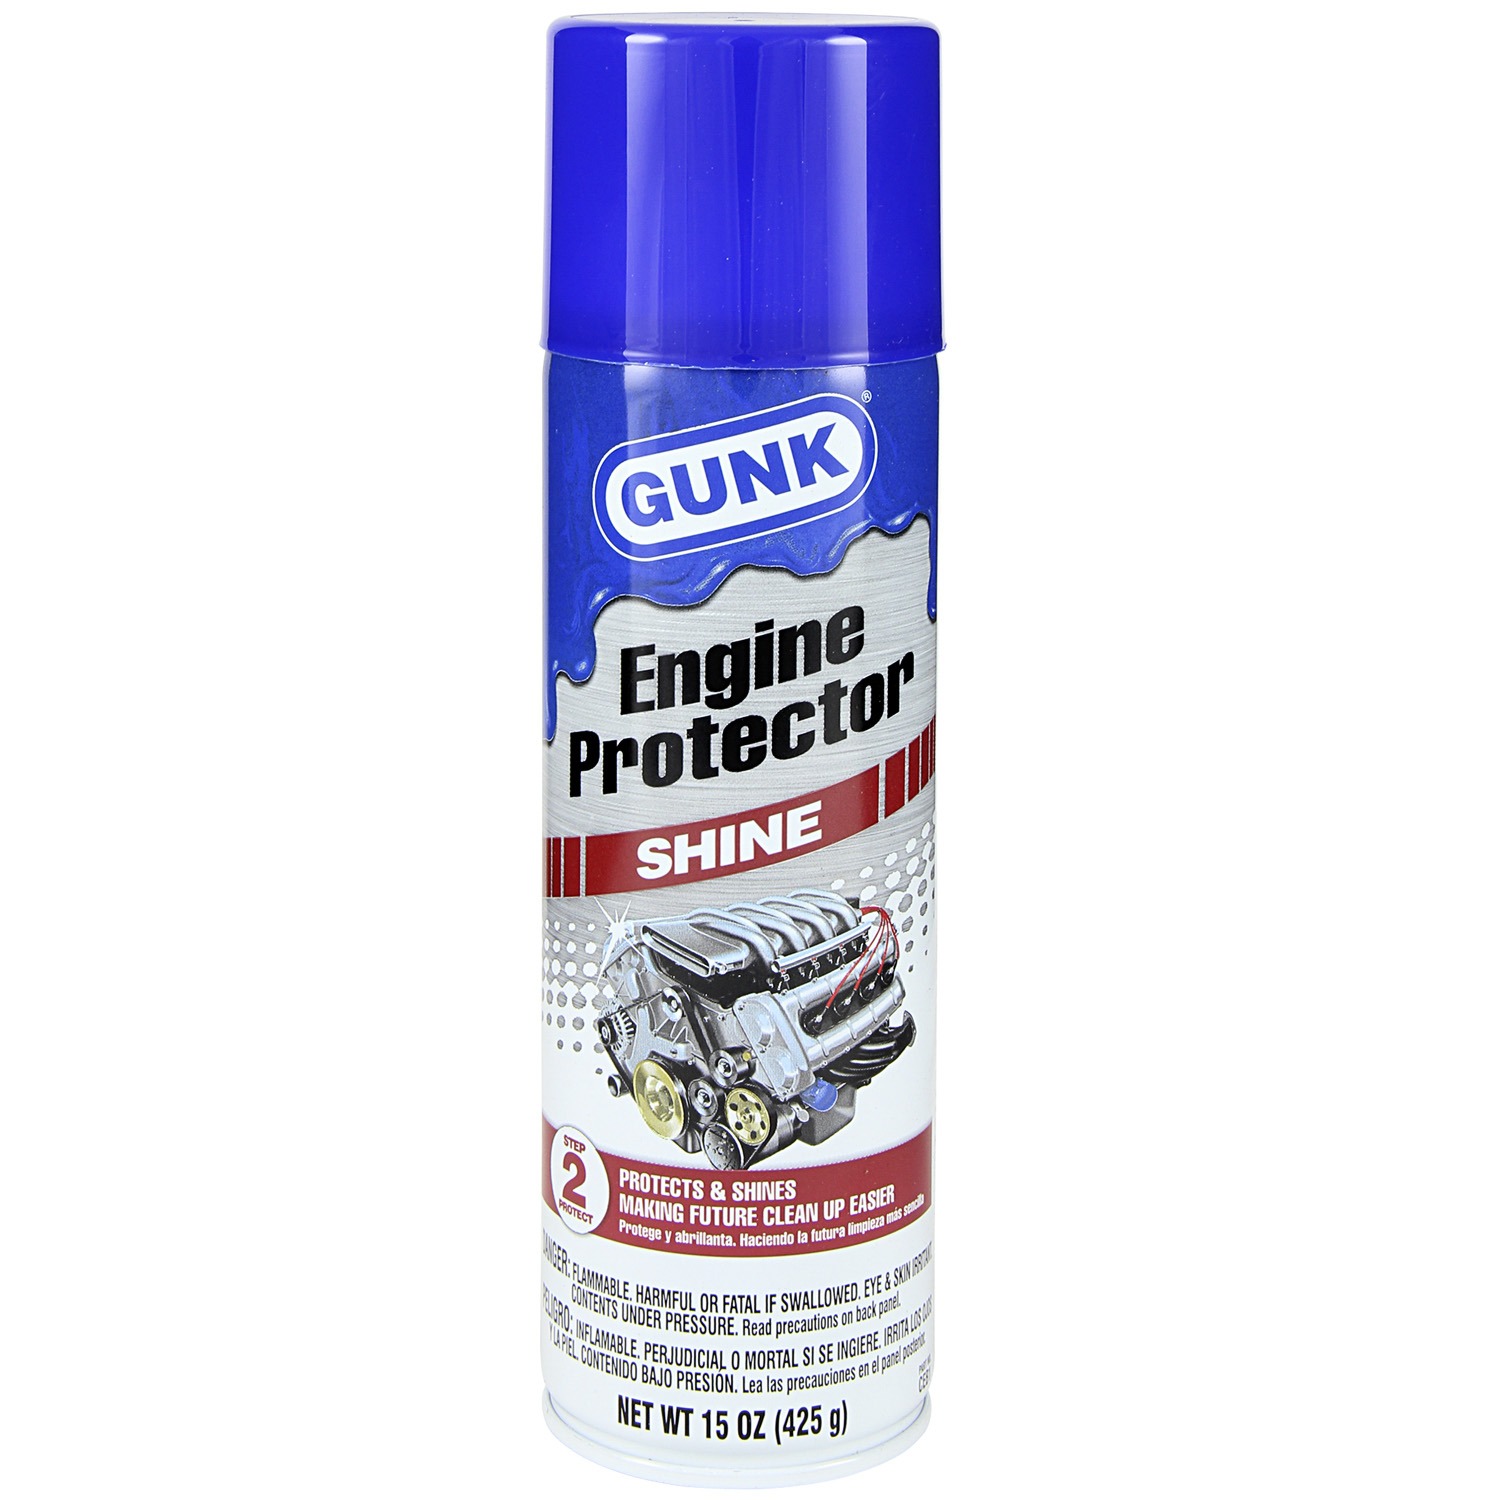 GUNK on X: Defend ur engine w/ 2-step GUNK Clean + Protect. Step 1: Clean  w/ GUNK Engine Cleaner. Step 2: Protect w/ GUNK Engine Protector.  #GUNKTough  / X